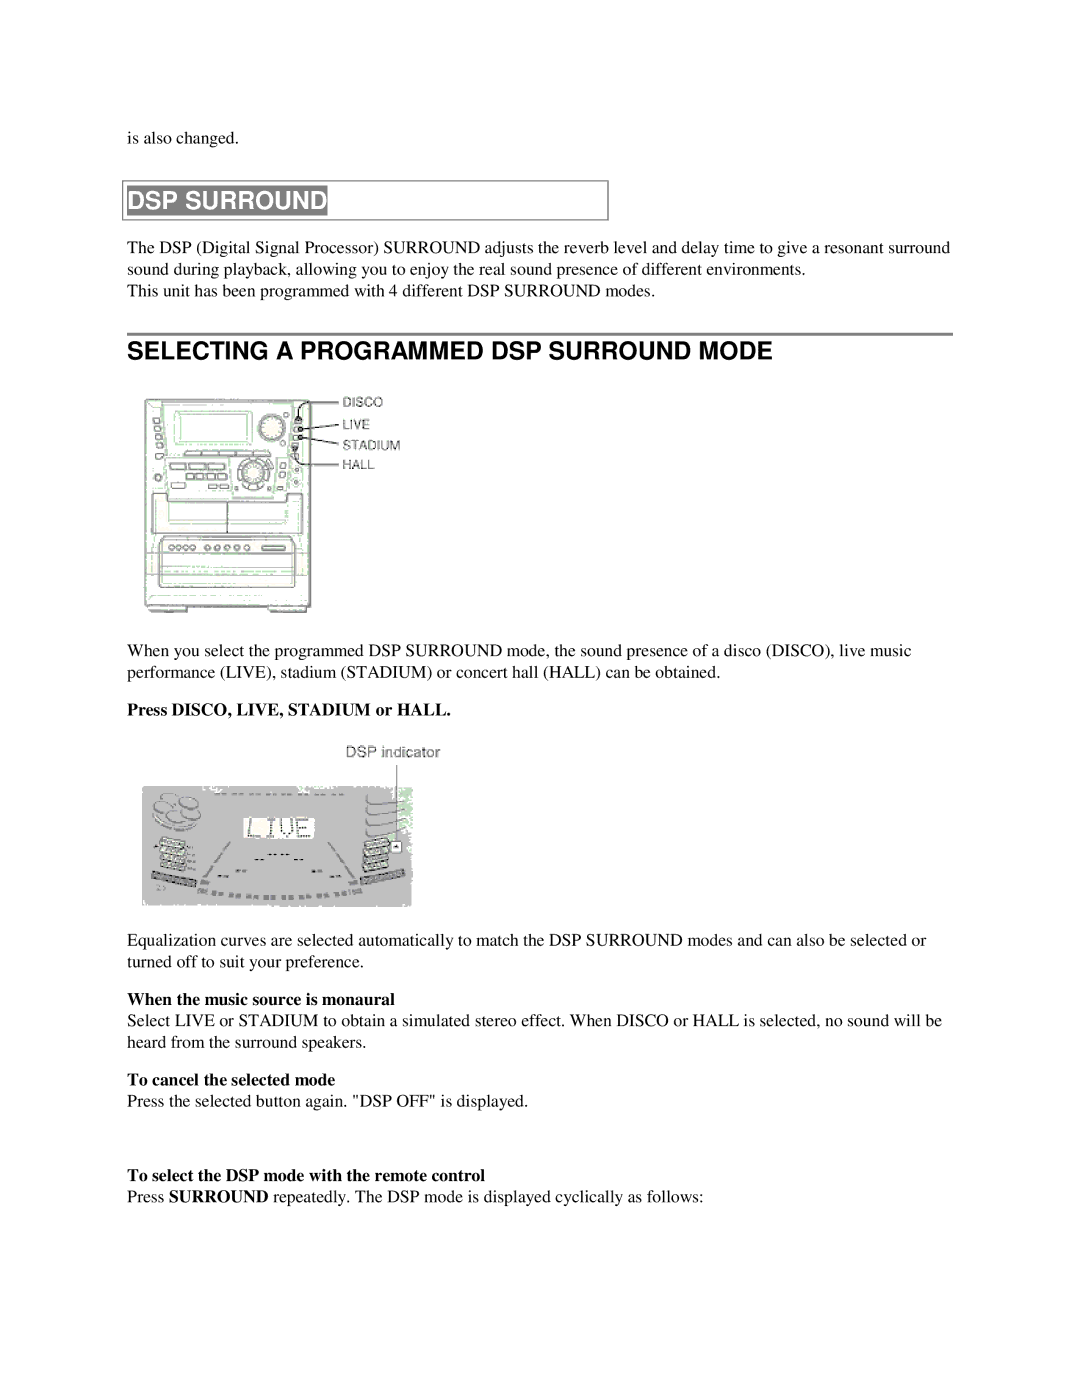 Aiwa NSX-MTD9 manual Selecting a Programmed DSP Surround Mode, Press DISCO, LIVE, Stadium or Hall 